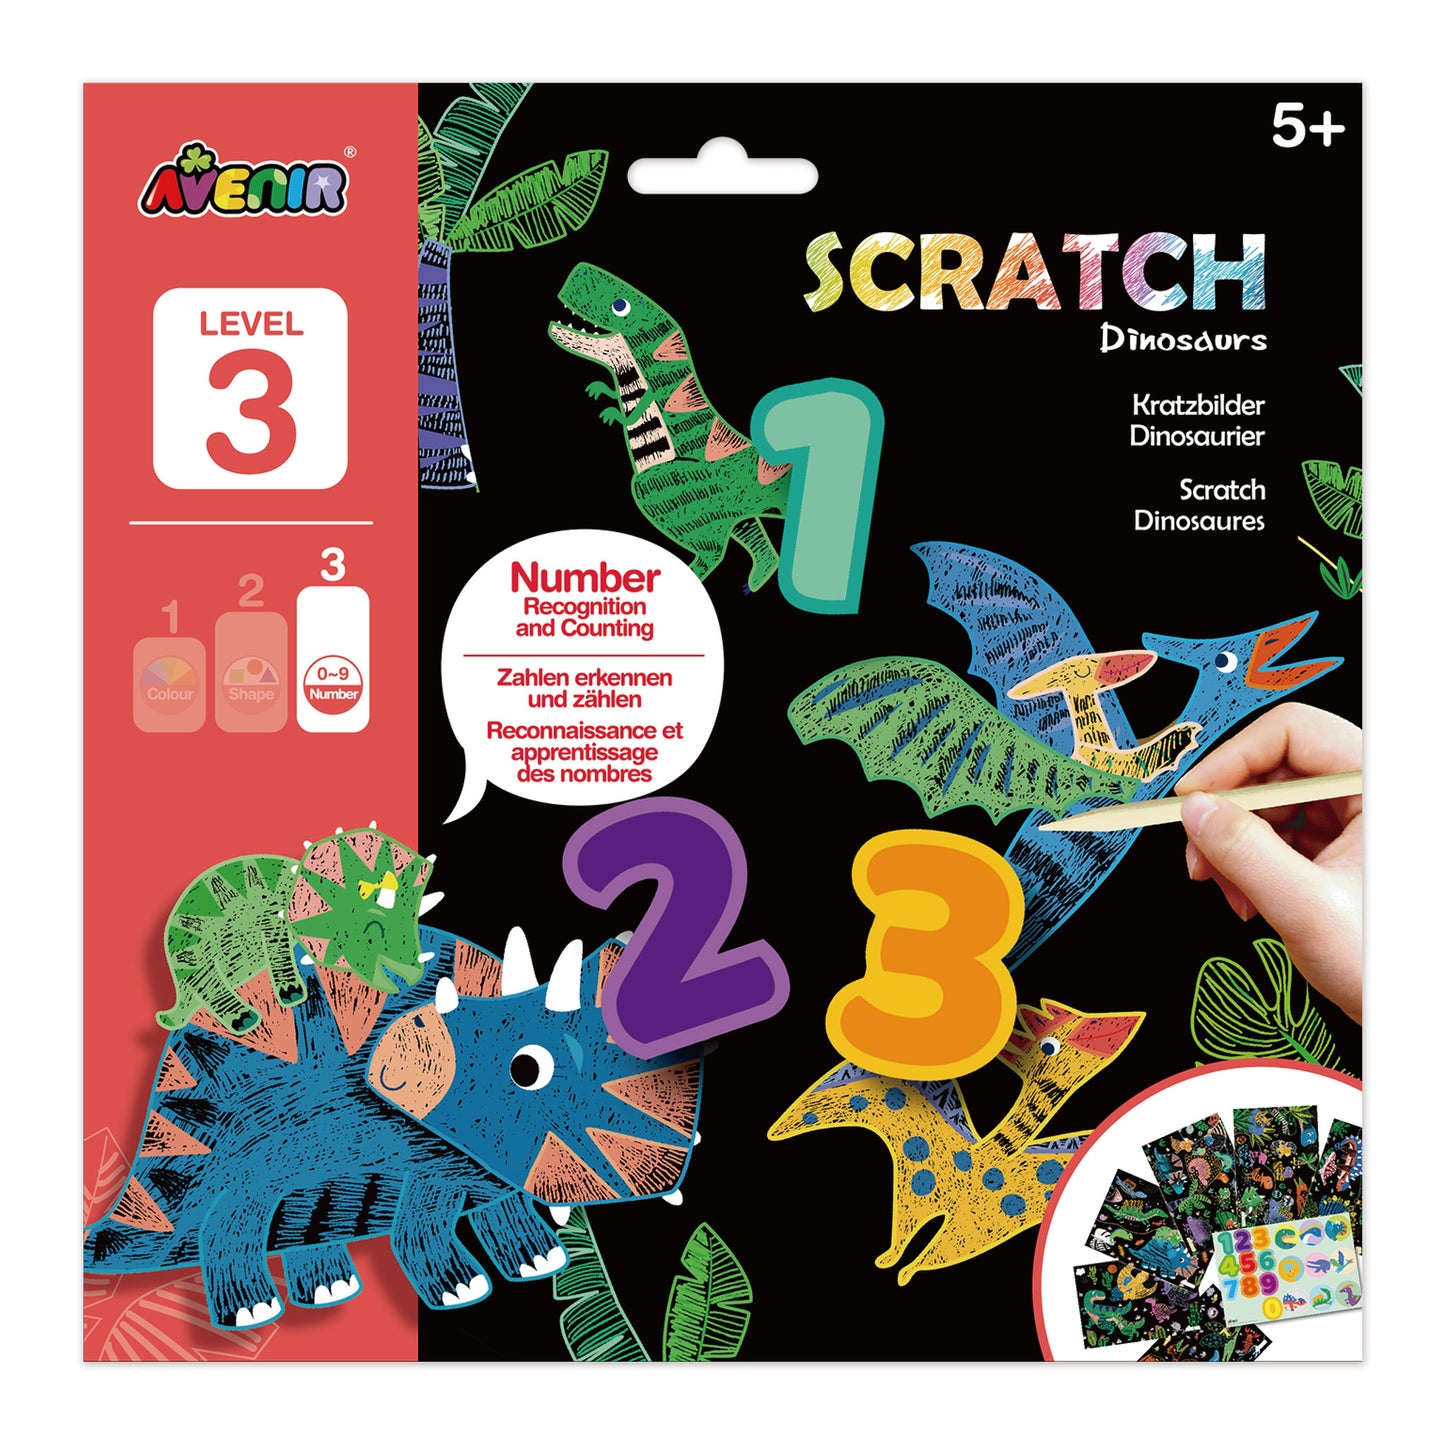 Scratch Dinosaurs